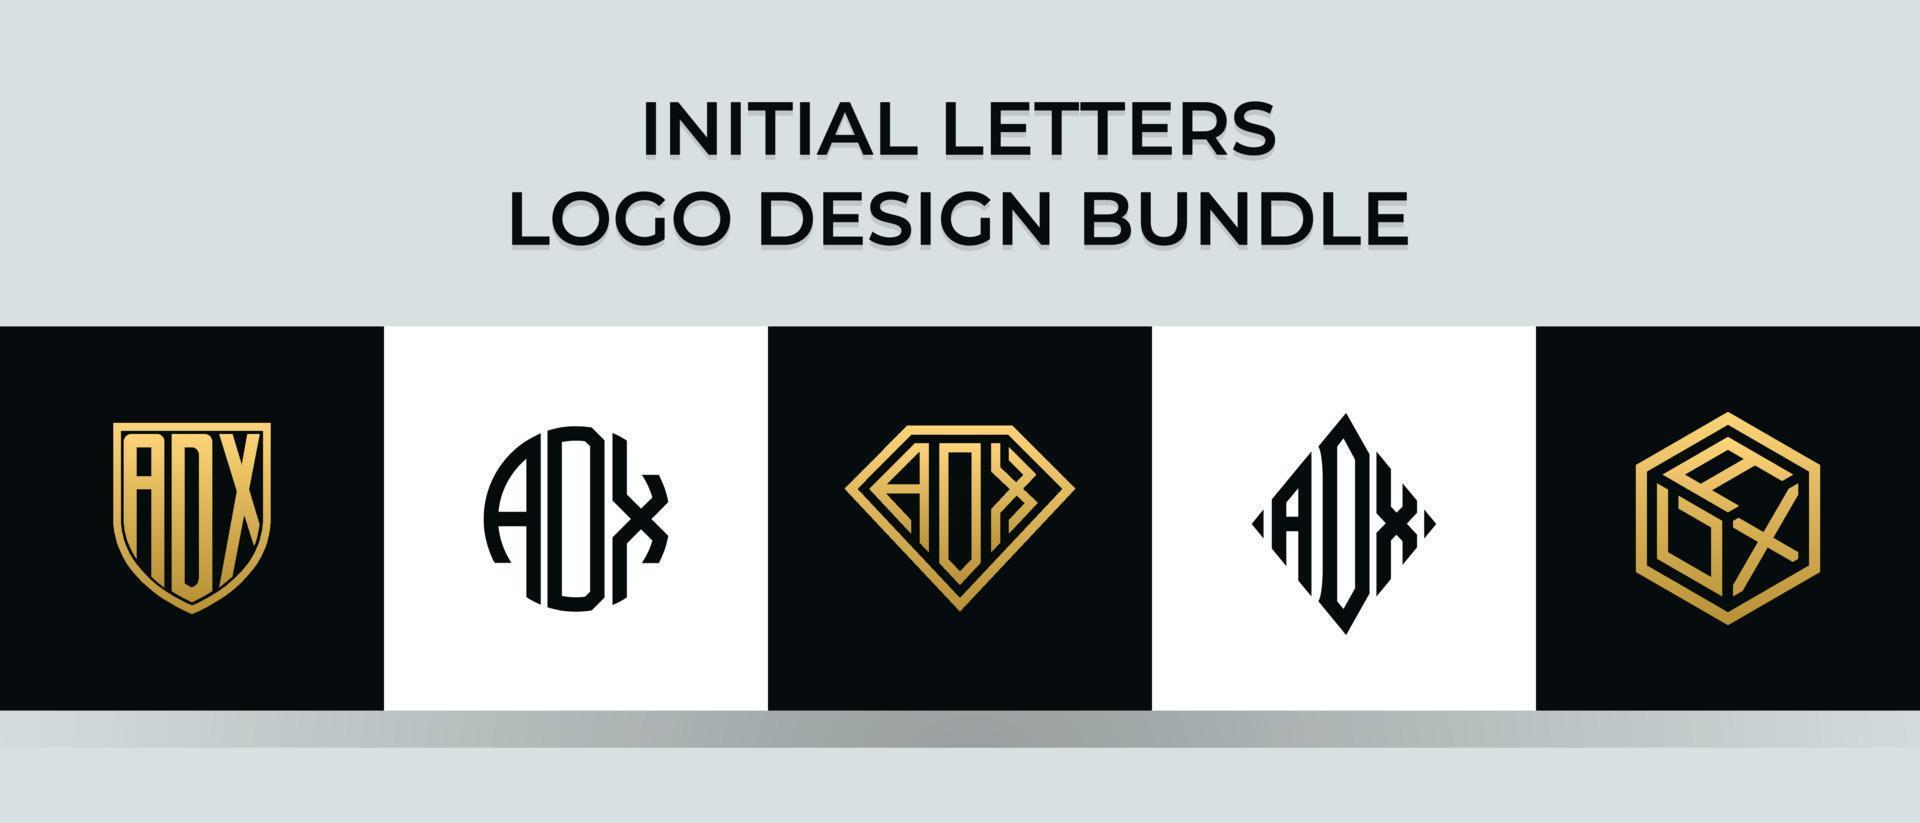 Anfangsbuchstaben Adx Logo Designs Bundle vektor